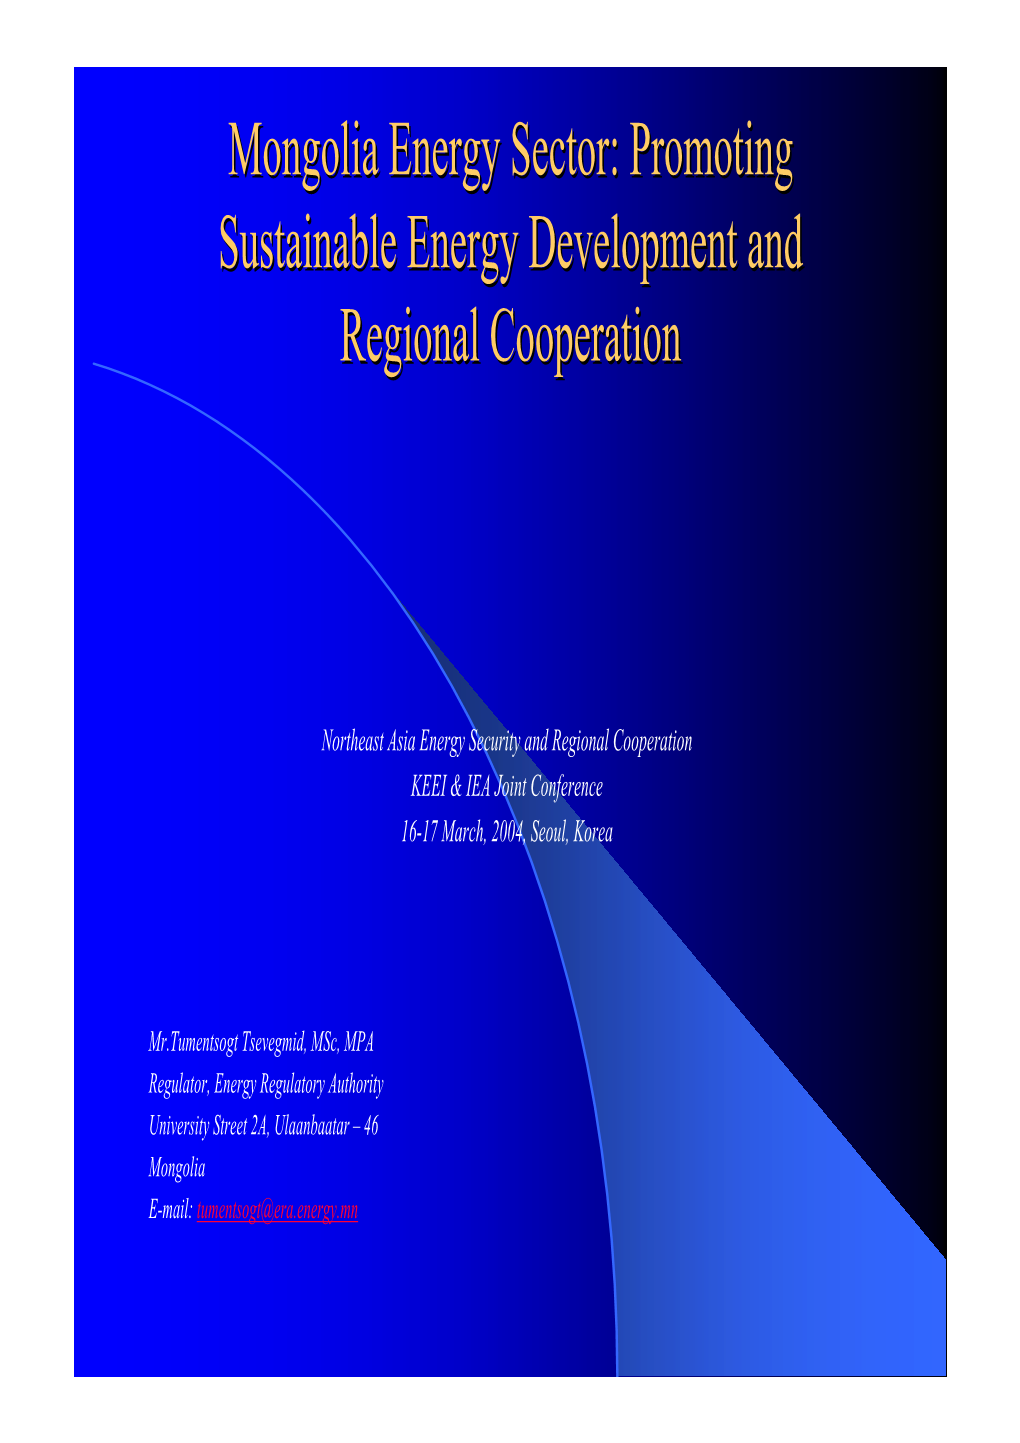 Mongolia Energy Sector: Promoting Sustainable Energy Development